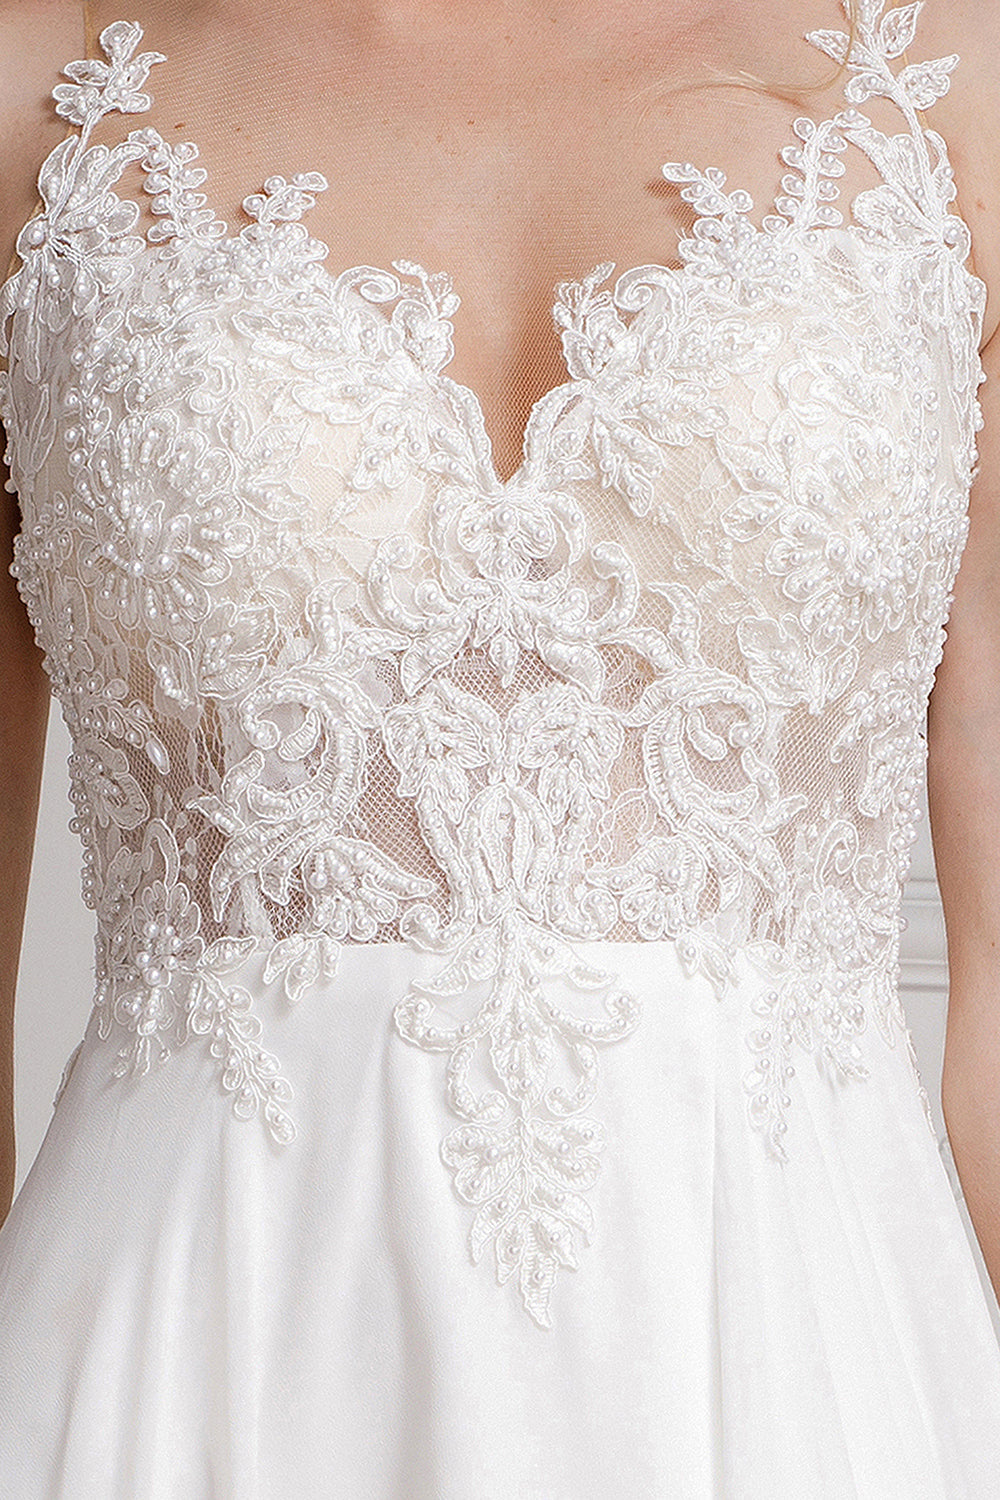 Illusion V-Neck Sheer Back Embroidered Lace Slit Long Wedding Dress AC375 Elsy Style Wedding Dress